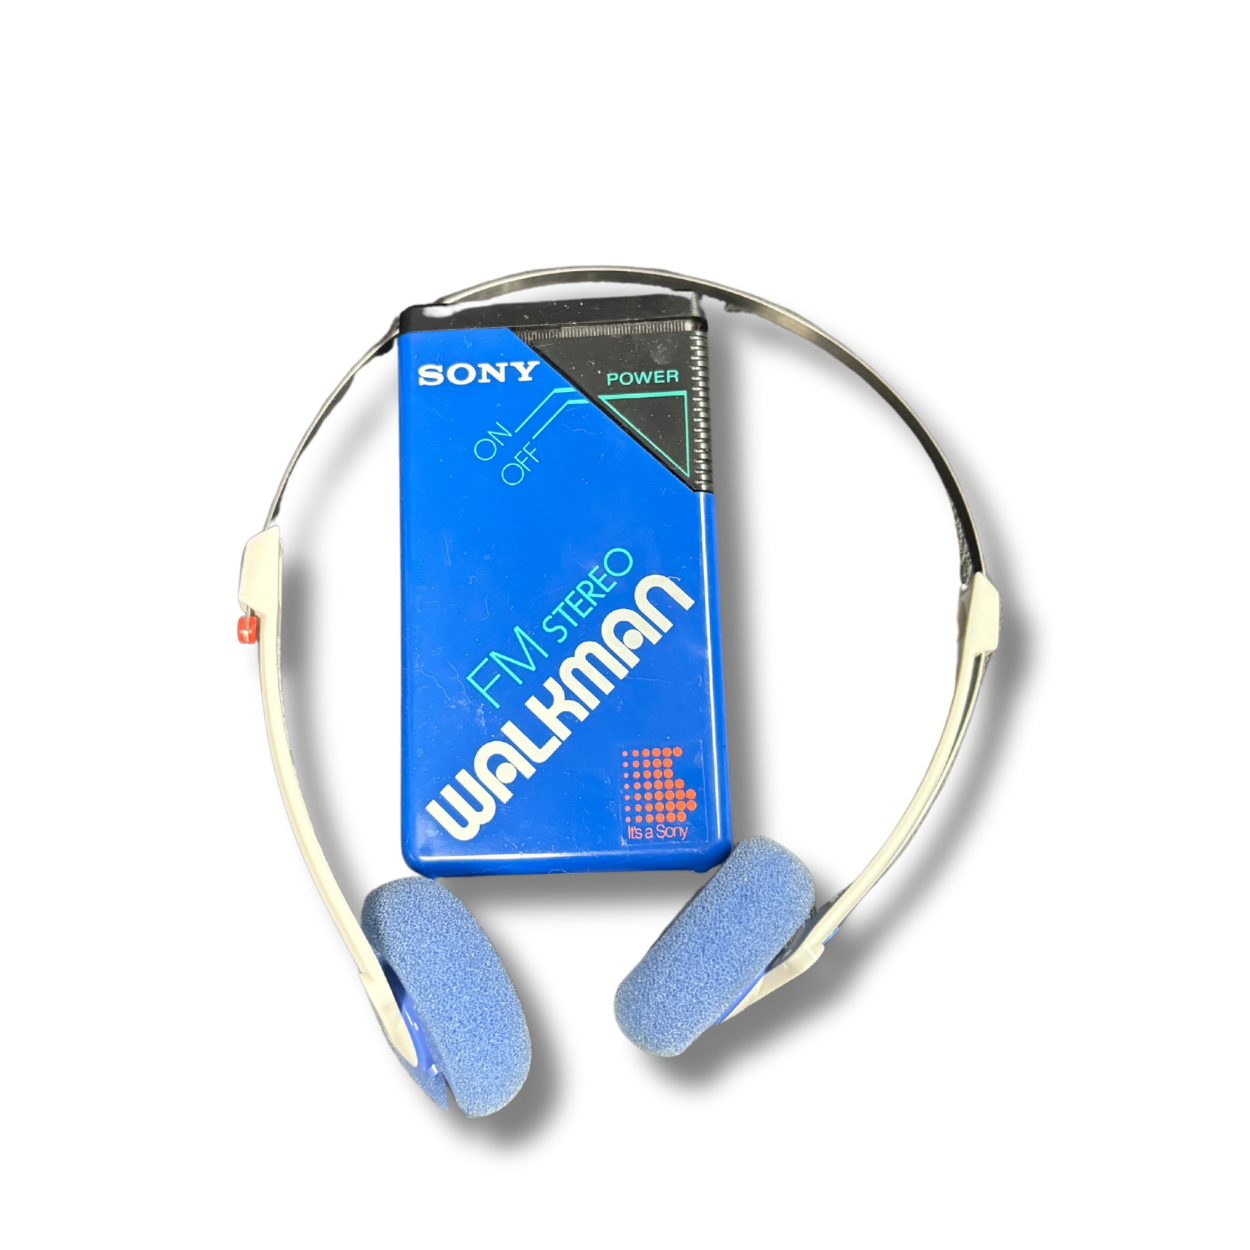 Vintage Sony Walkman SRF-20W FM Stereo - Blue with Belt Clip